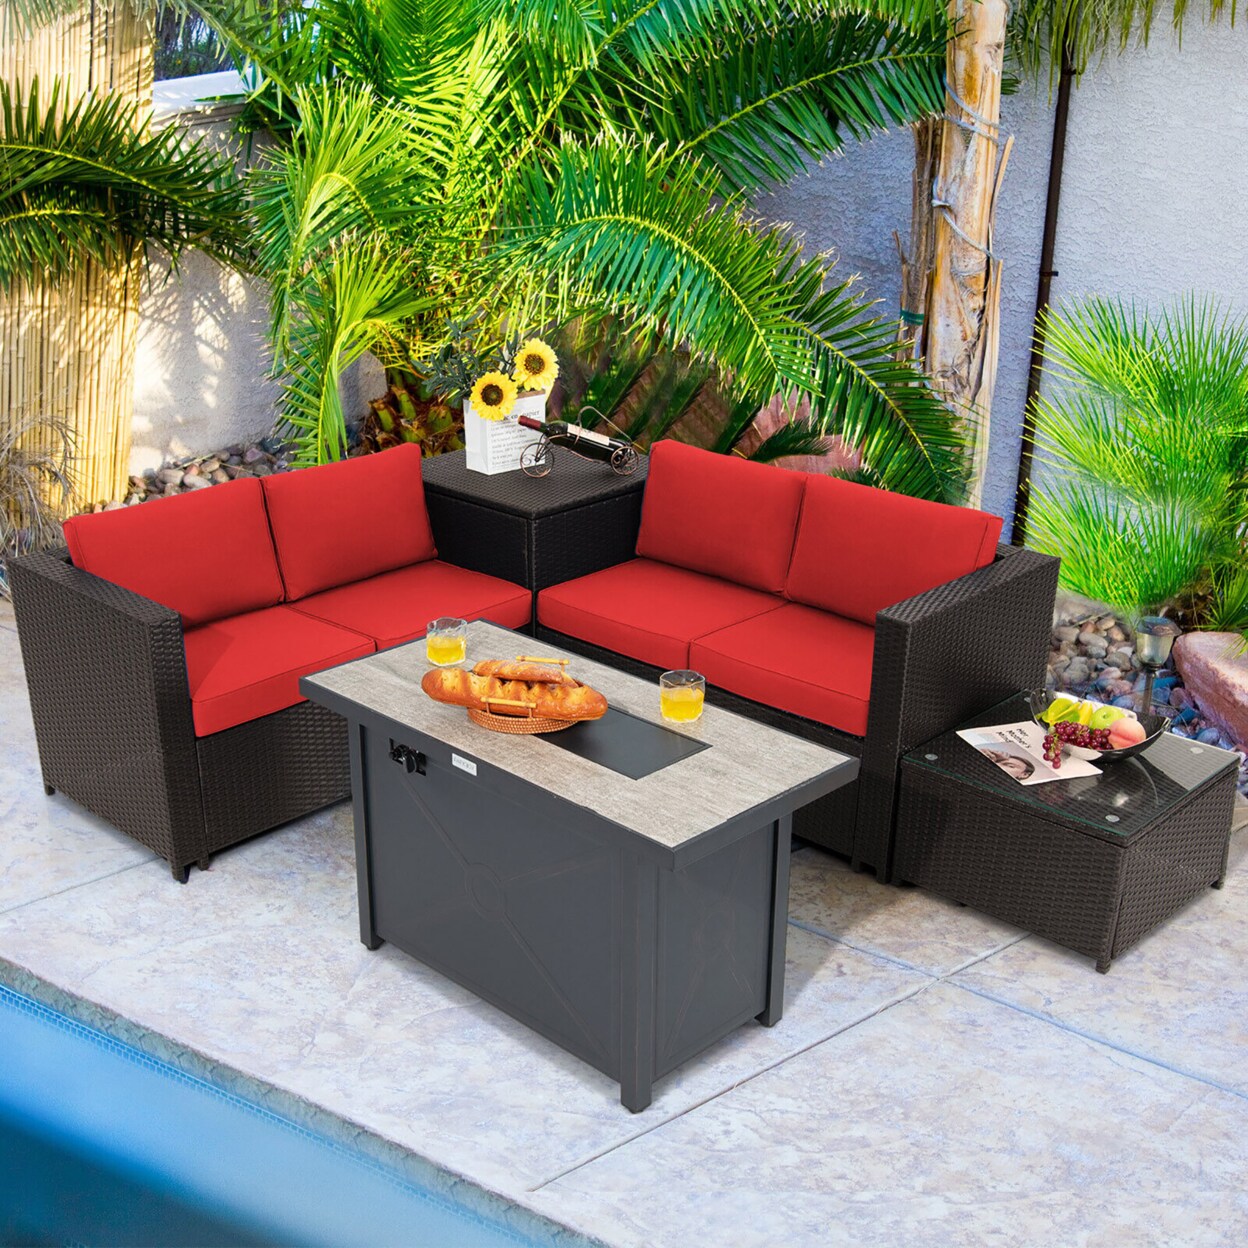 Gymax 5PCS Patio Rattan Furniture Set Fire Pit Table w/ Cover Storage Cushion